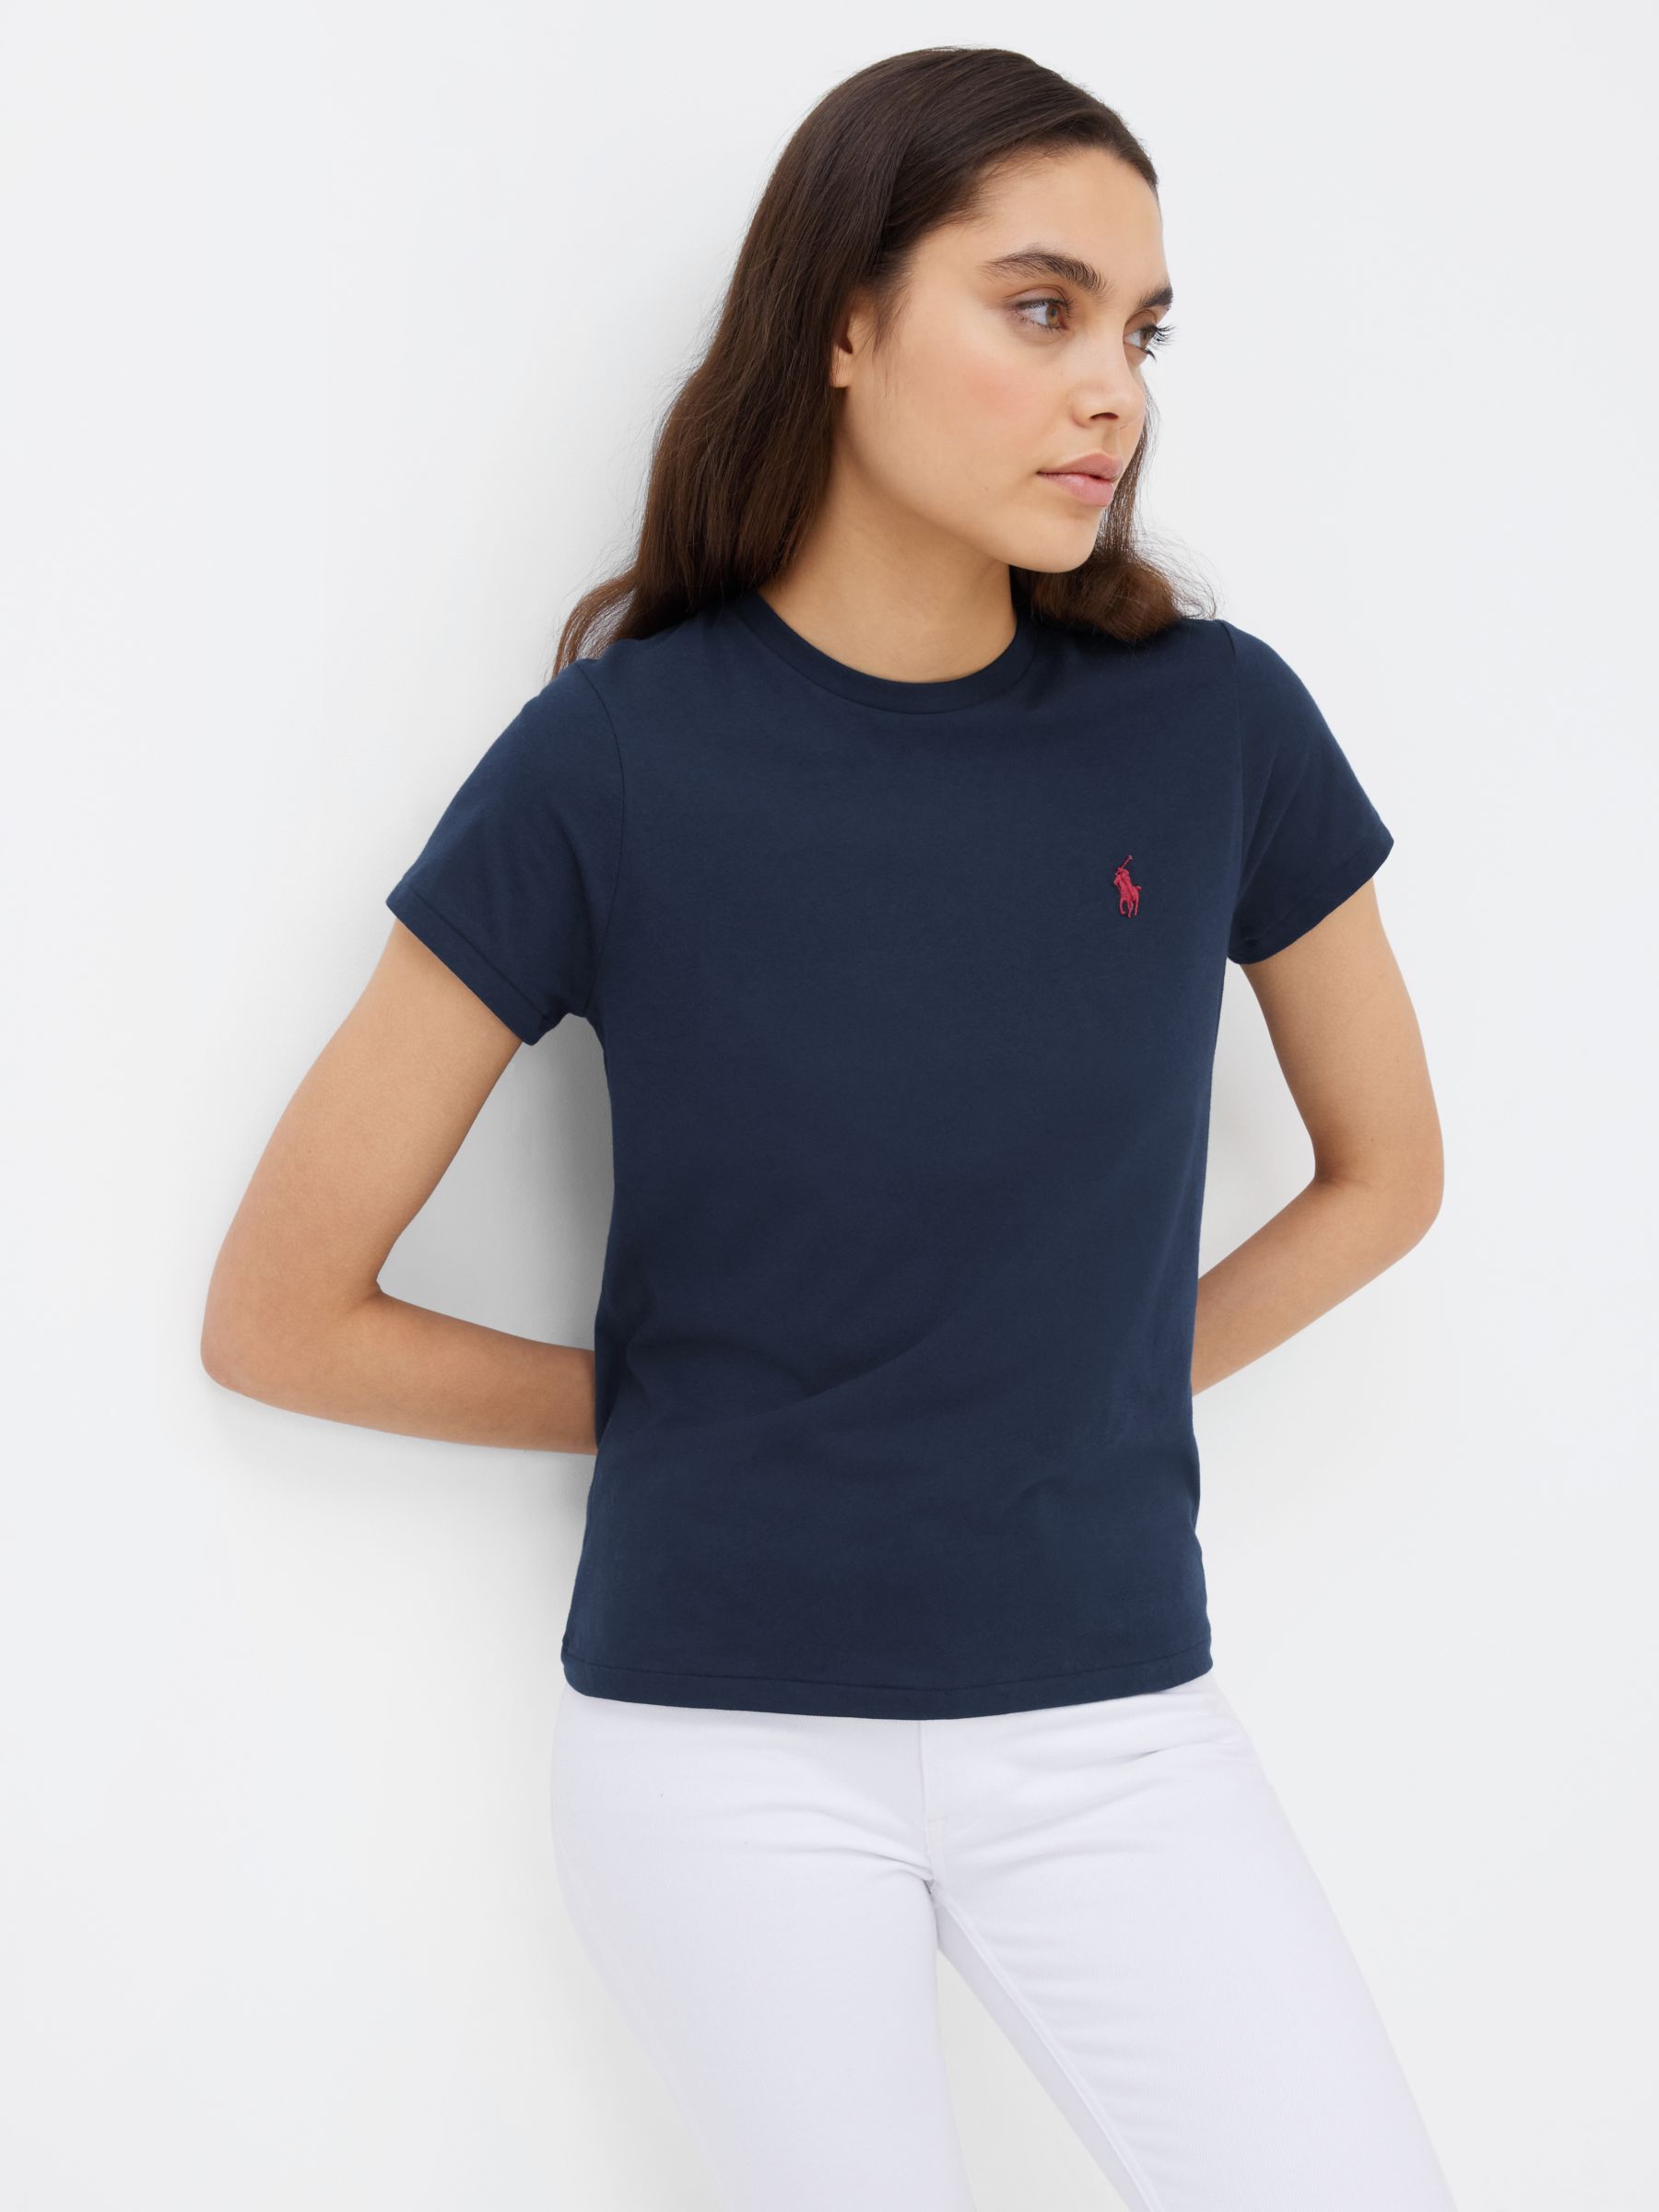 Women's Ralph Lauren T-Shirts | John Lewis & Partners